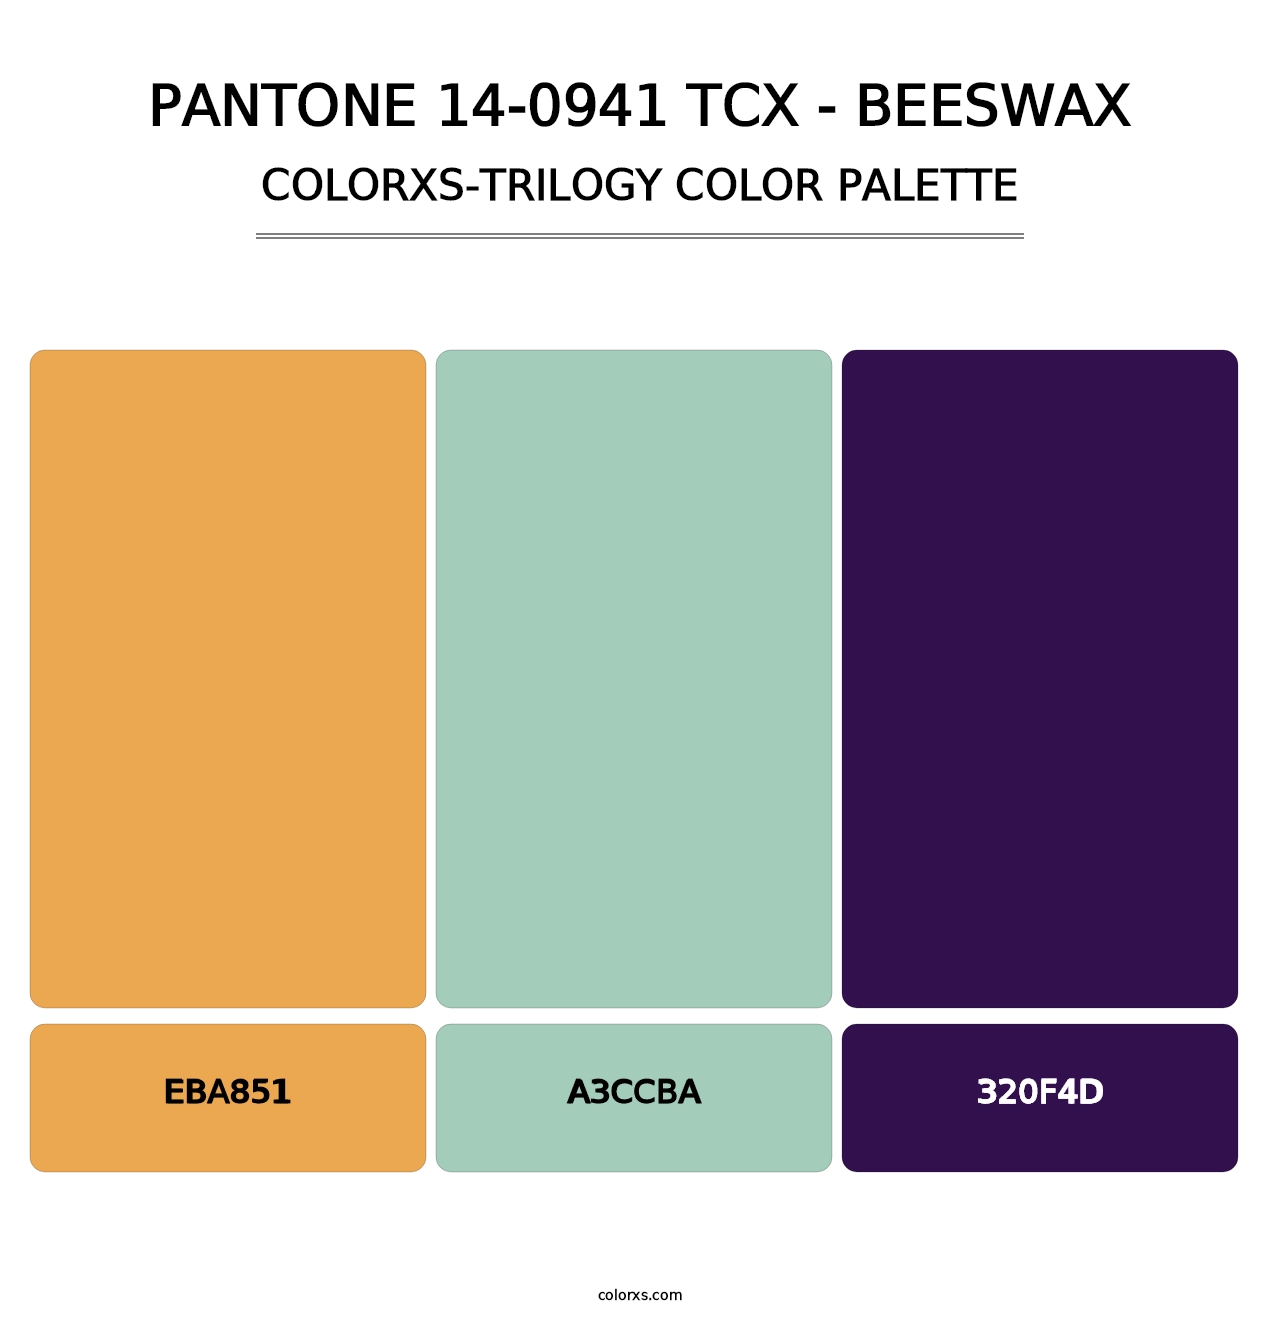 PANTONE 14-0941 TCX - Beeswax - Colorxs Trilogy Palette